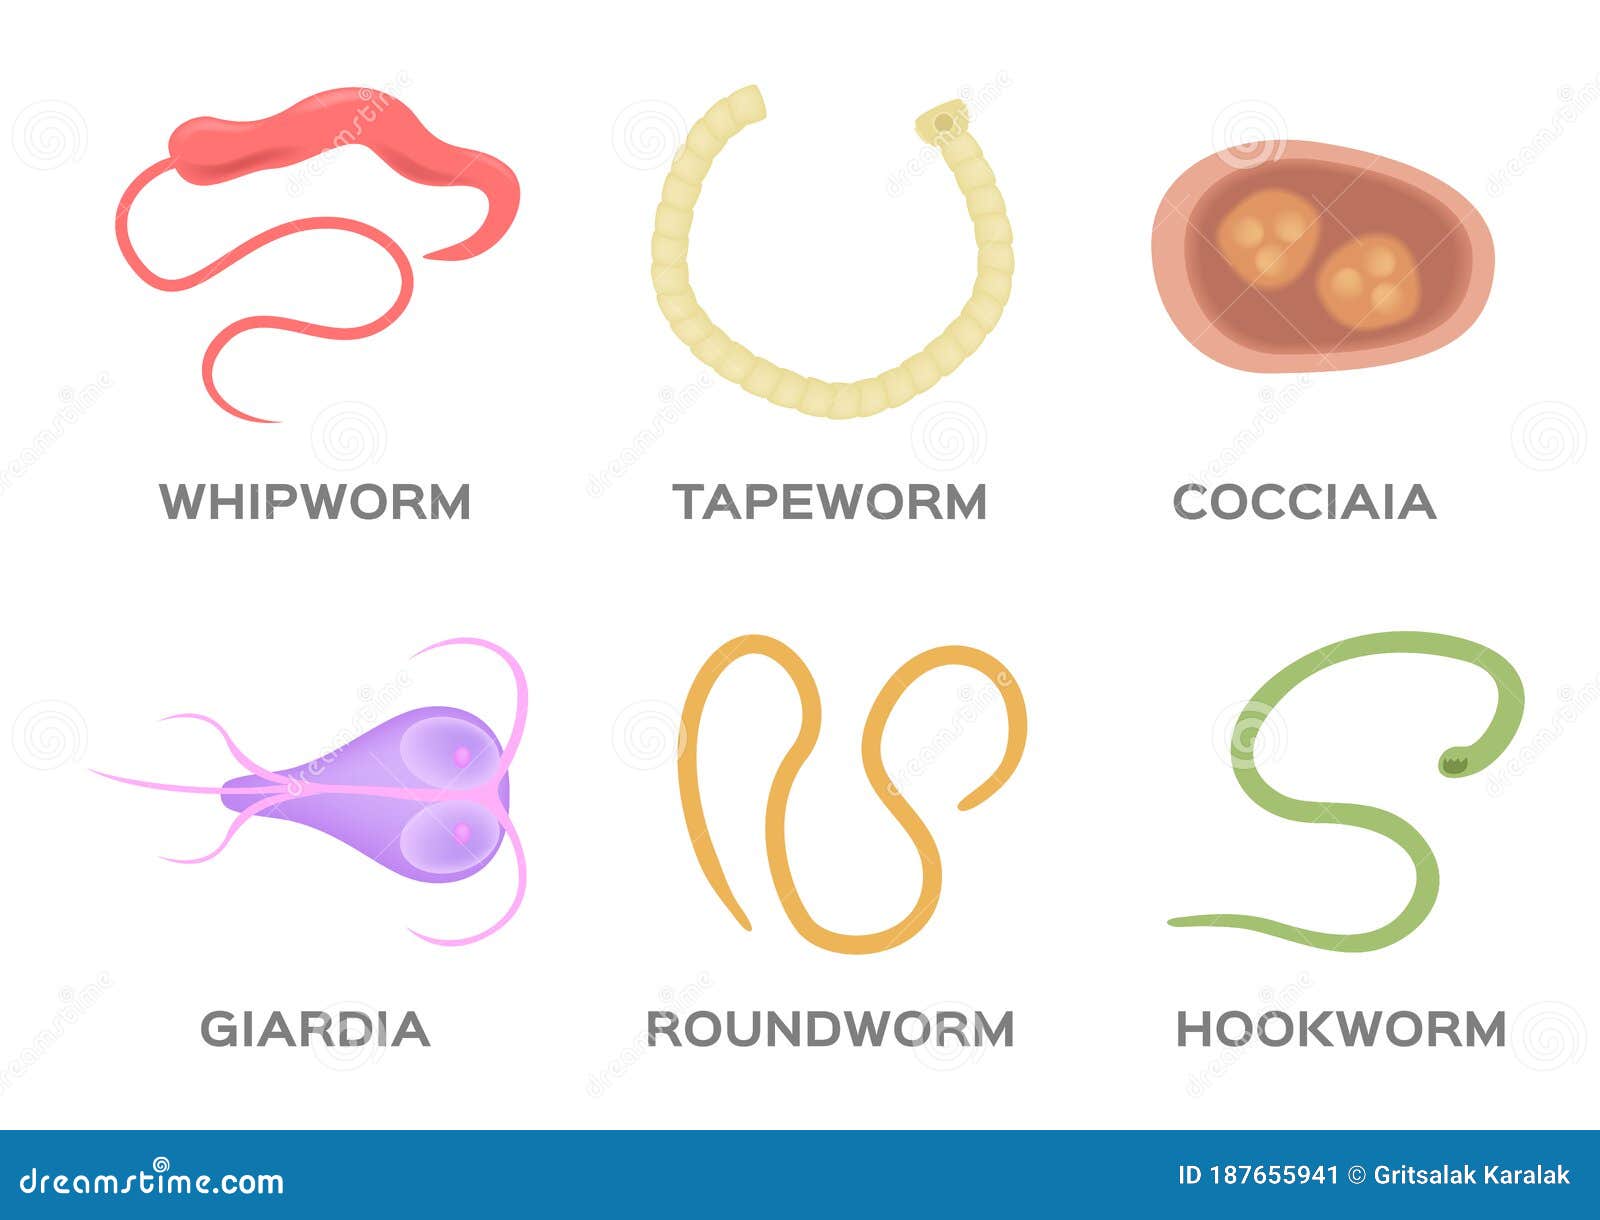 pinworms a giardiasis